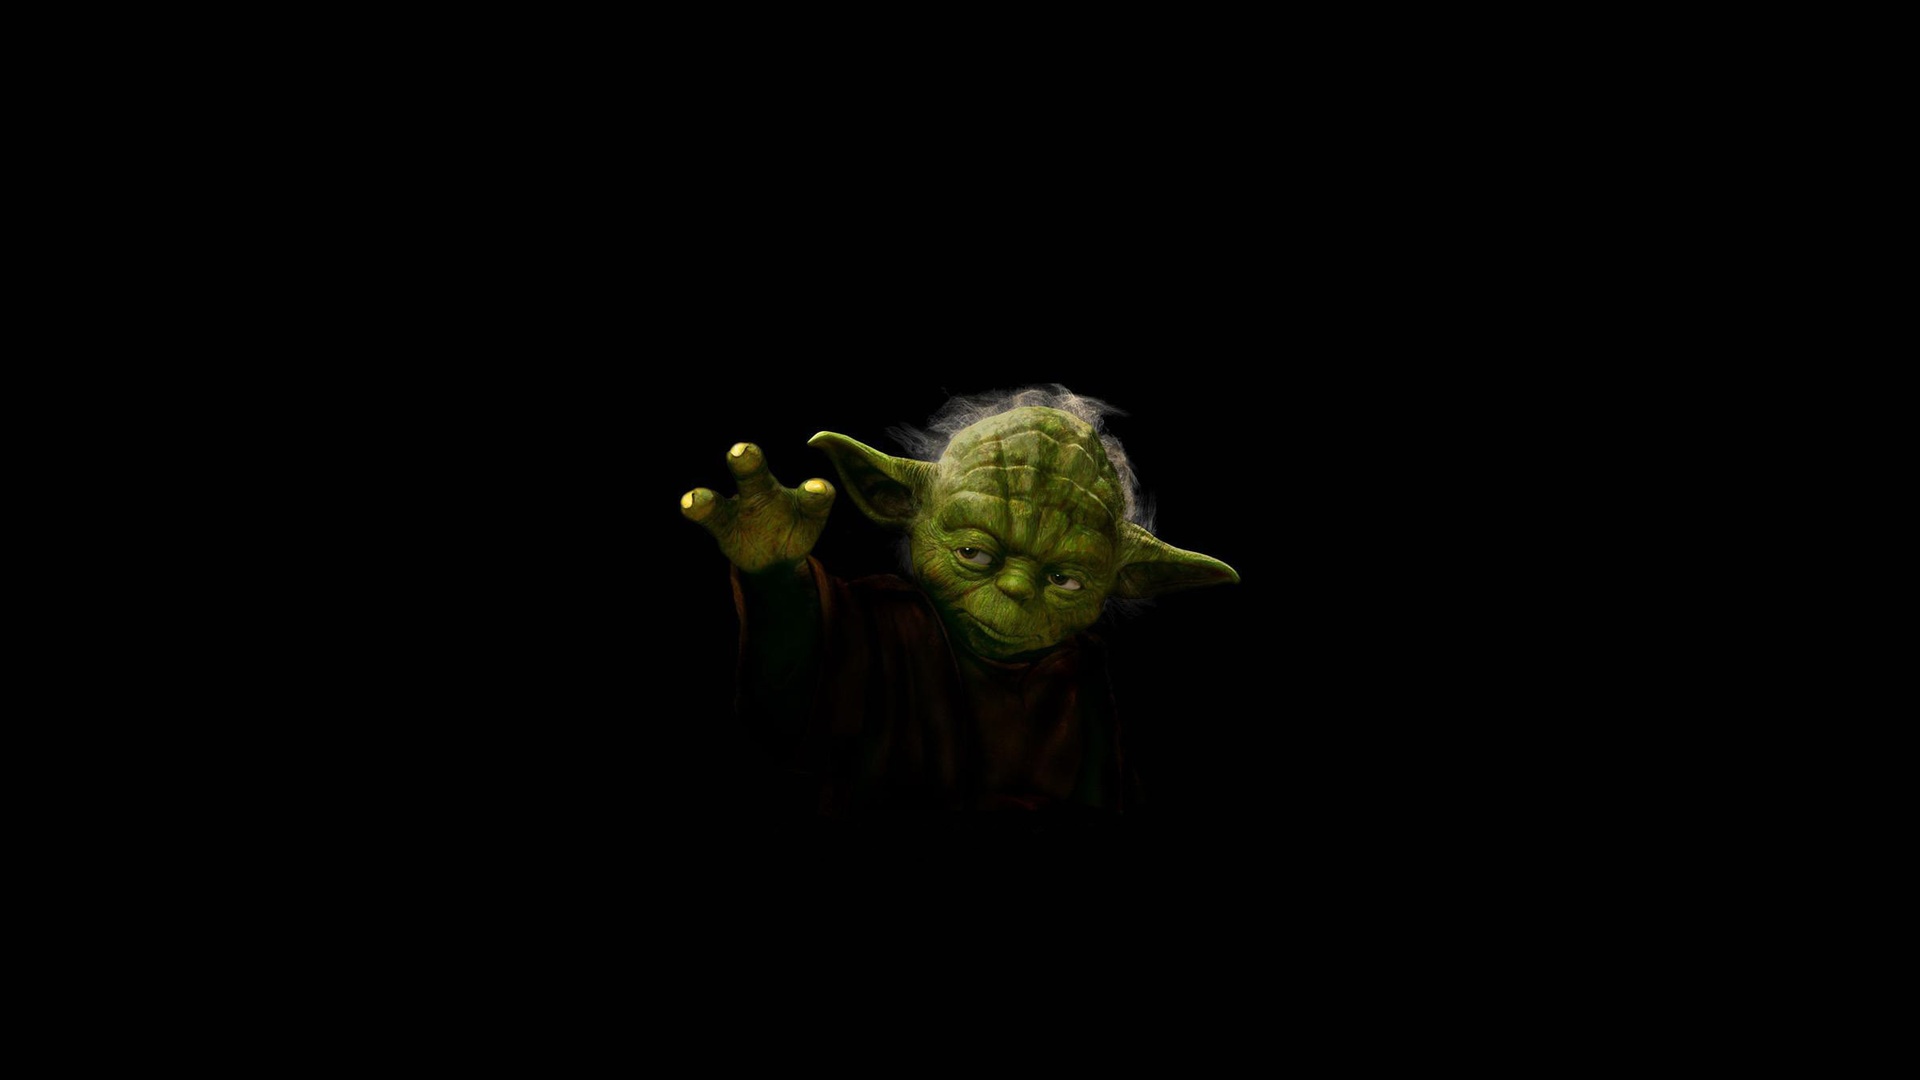 Cool Star Wars Yoda Wallpaper The Art Mad